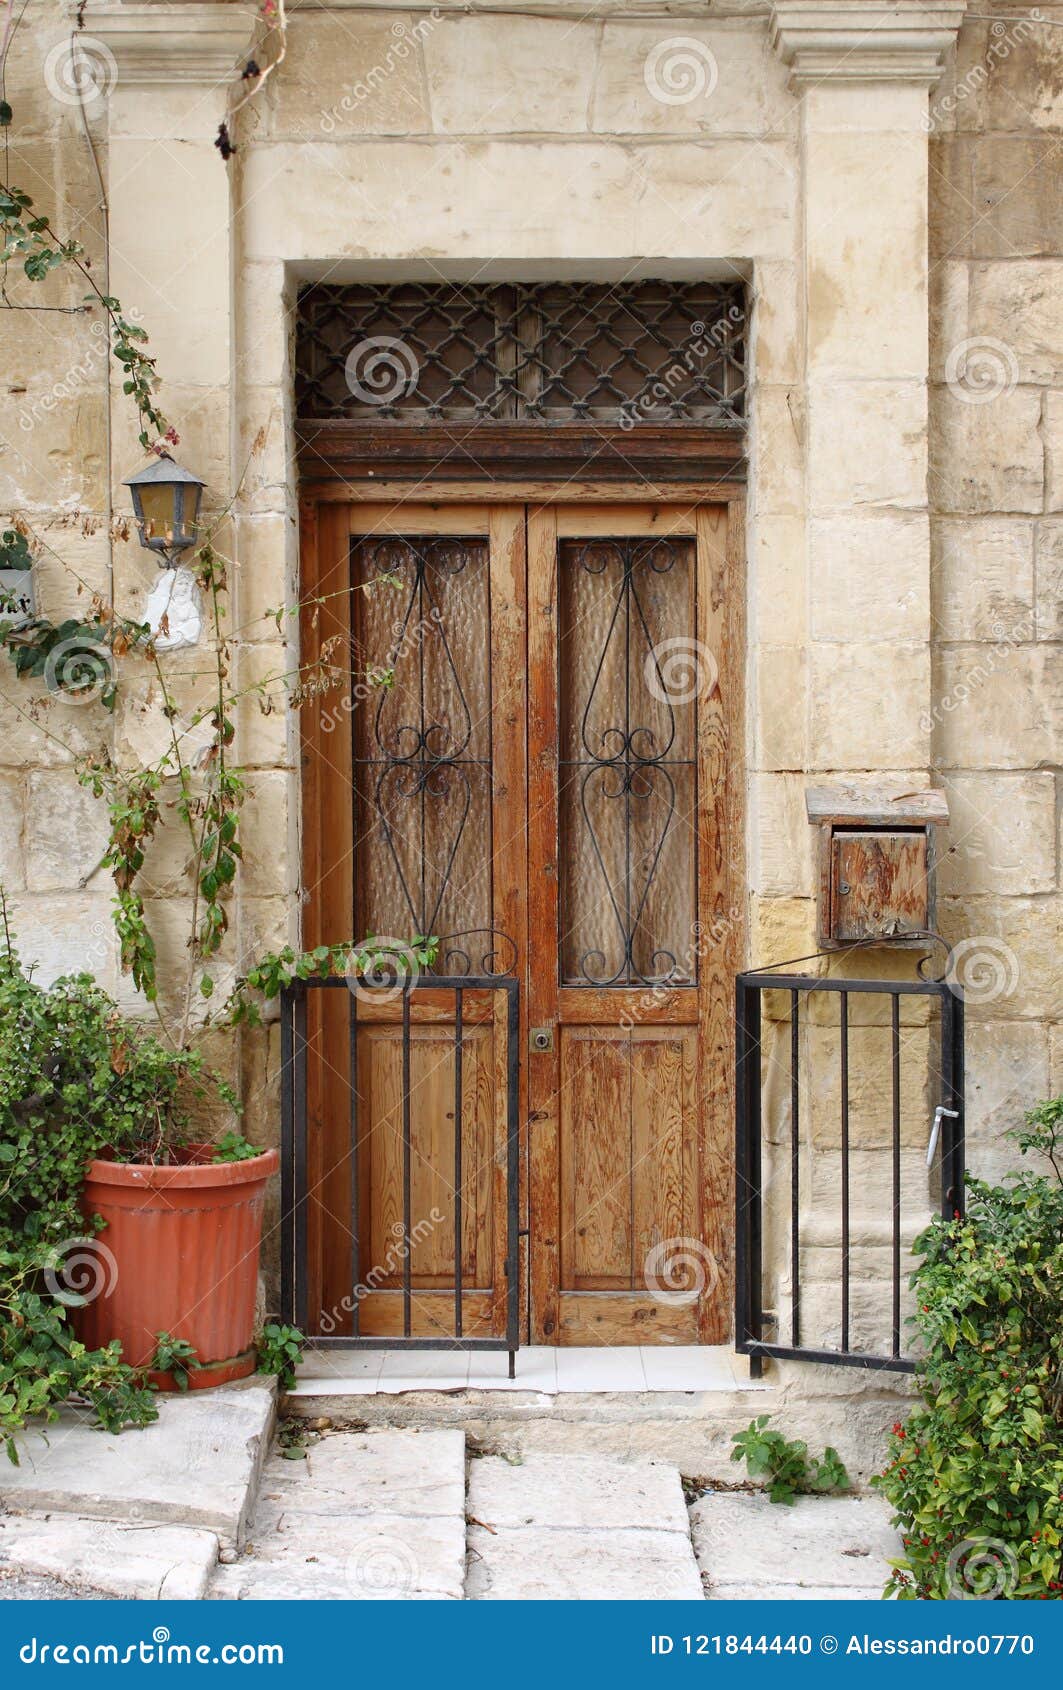 Medieval front door stock photo. Image of medieval, antique - 121844440